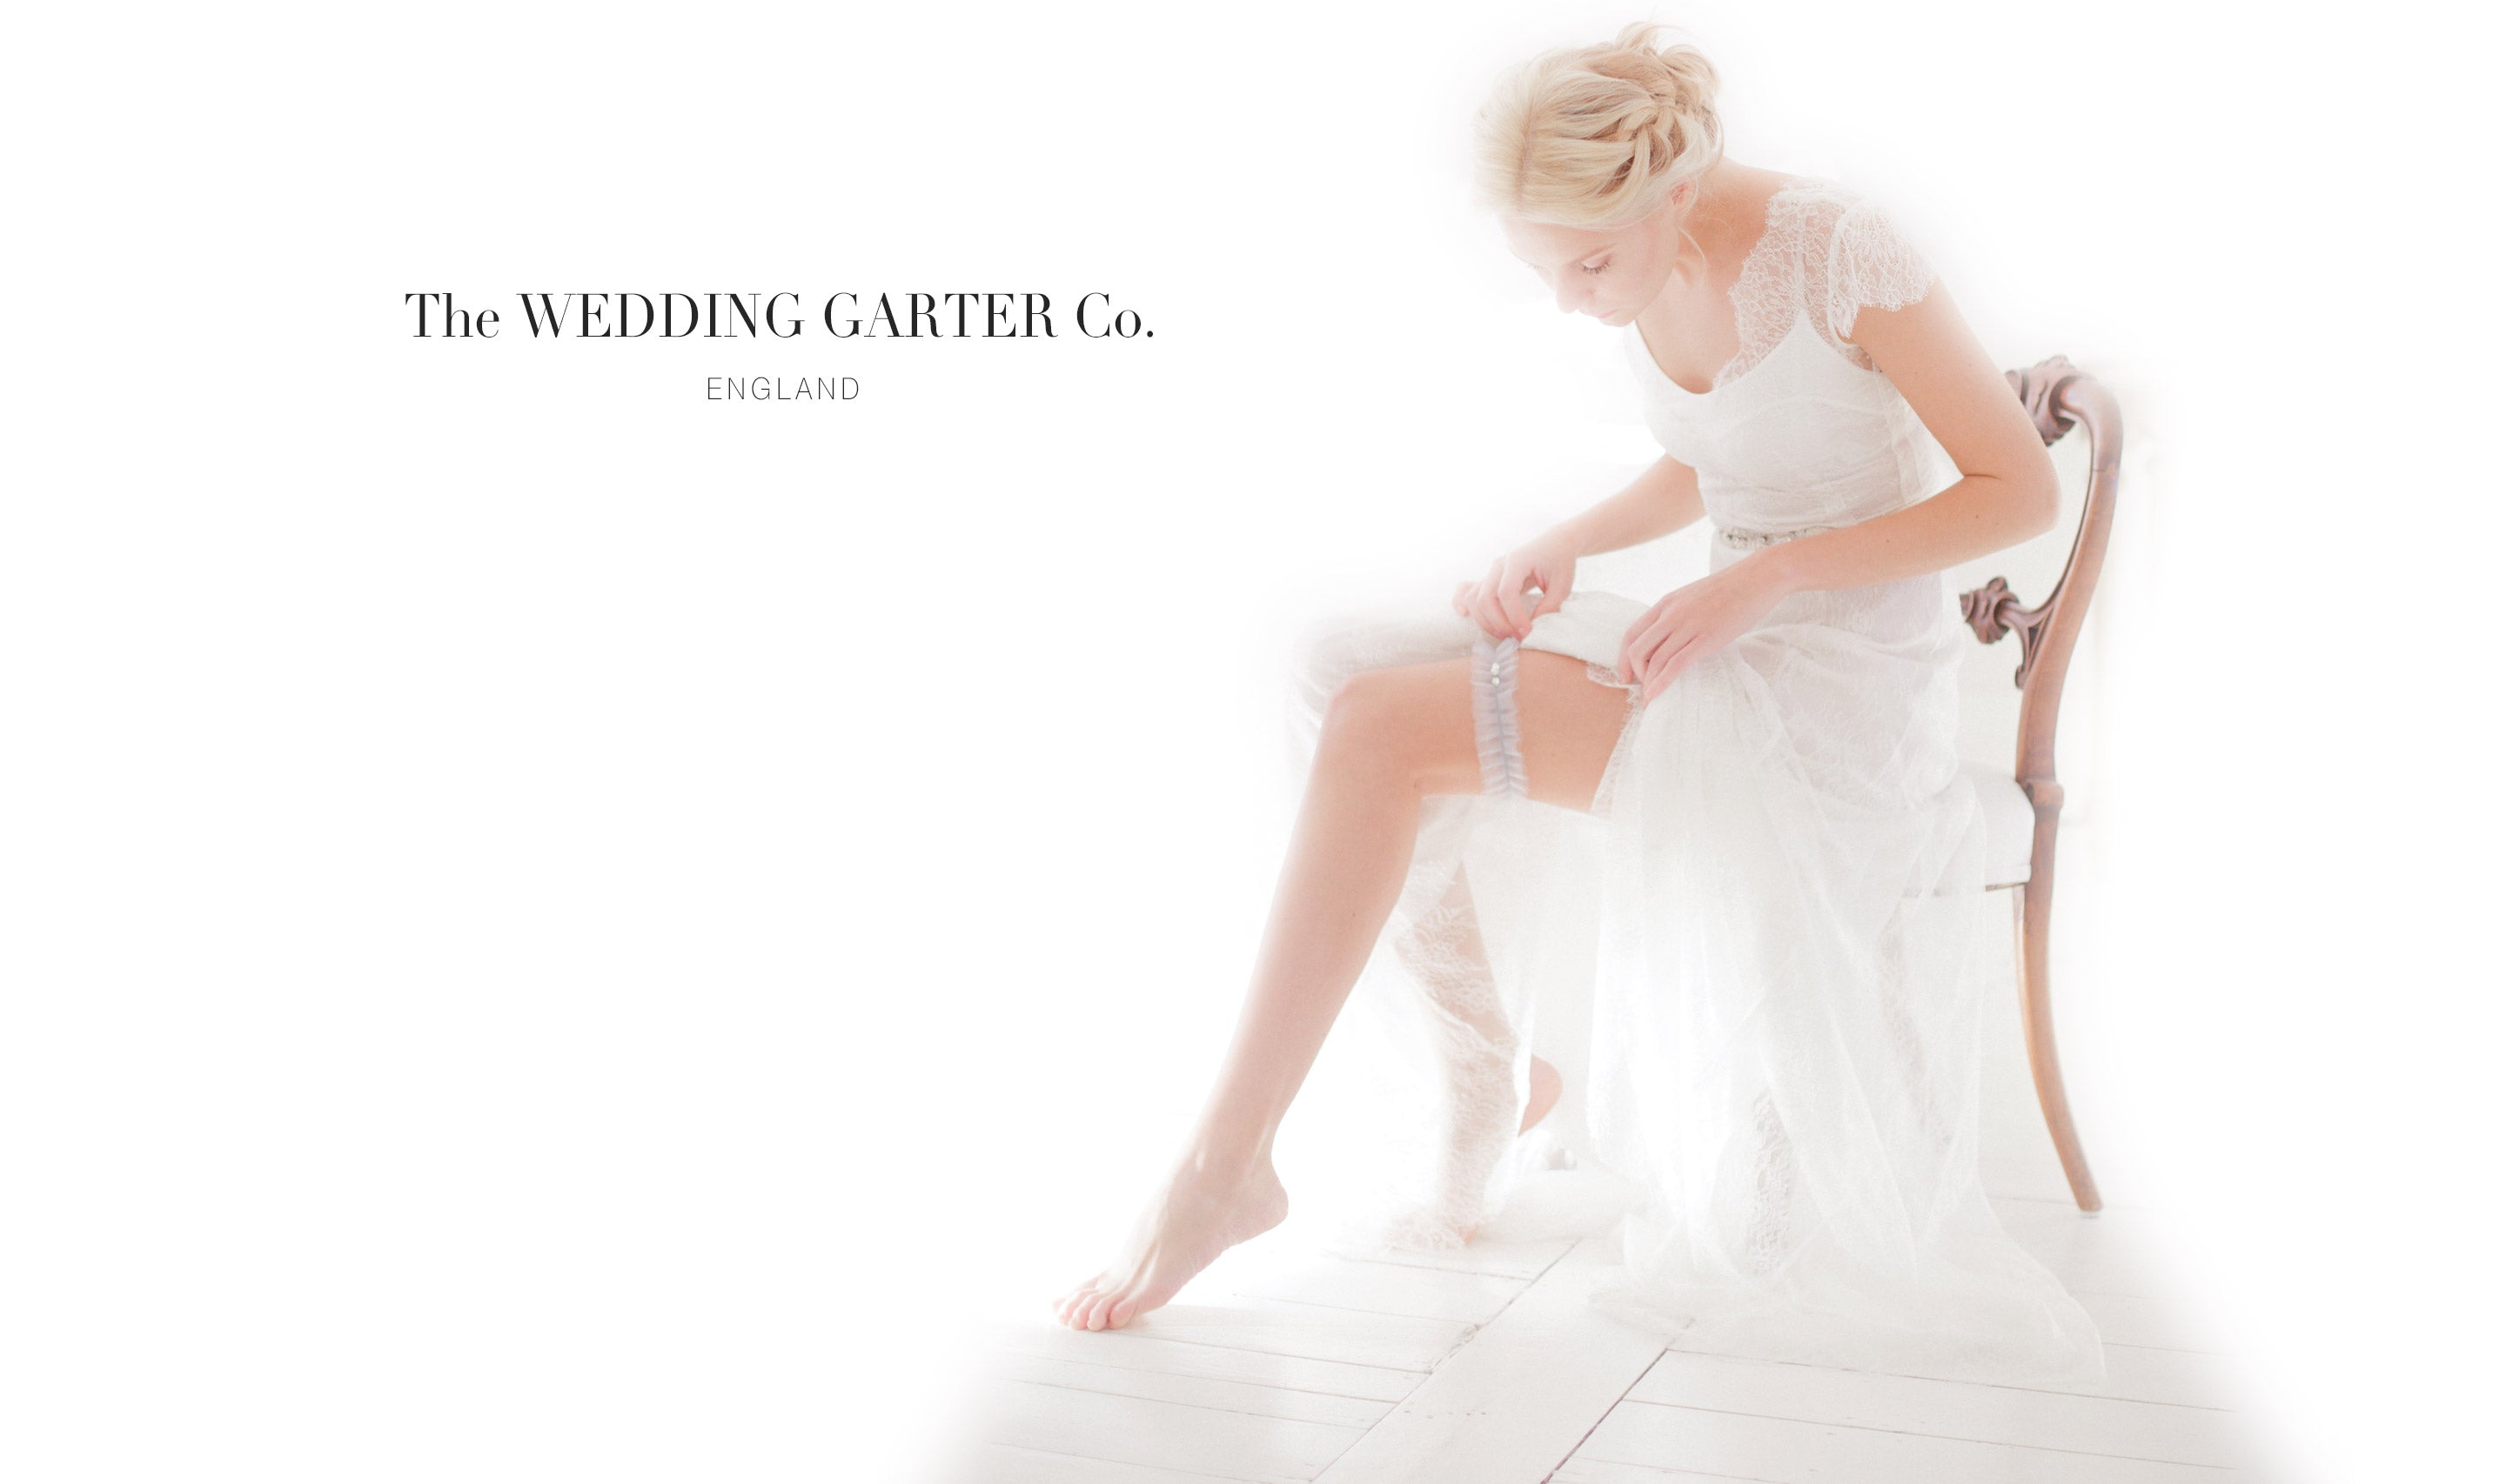 The Wedding Garter Co